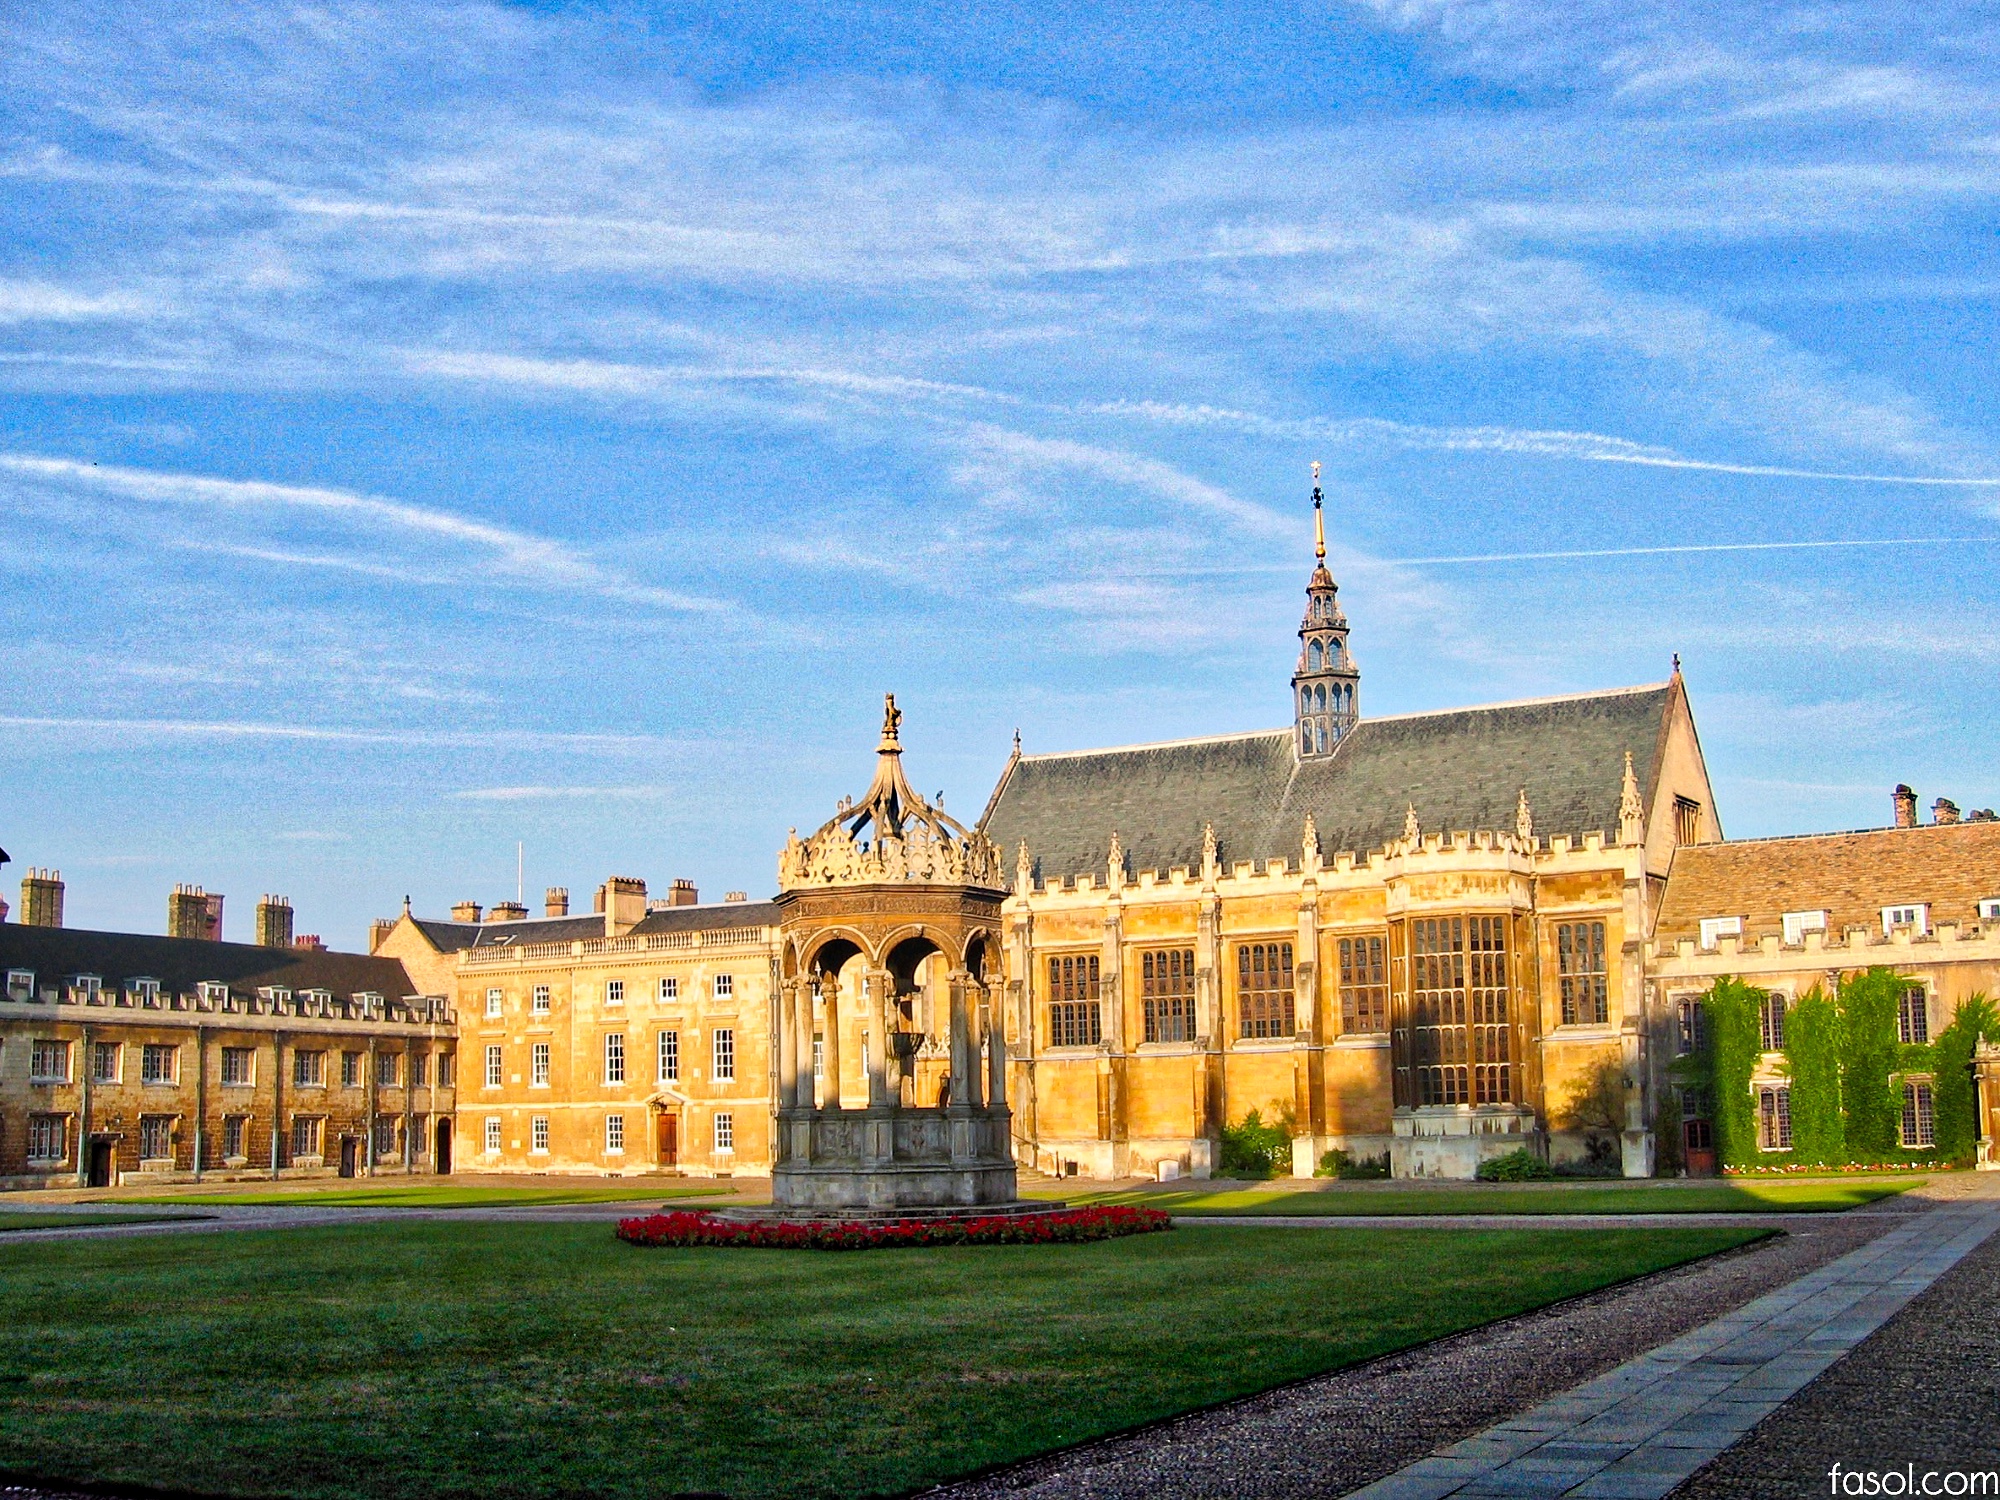 Trinity College Cambridge, founded 1546